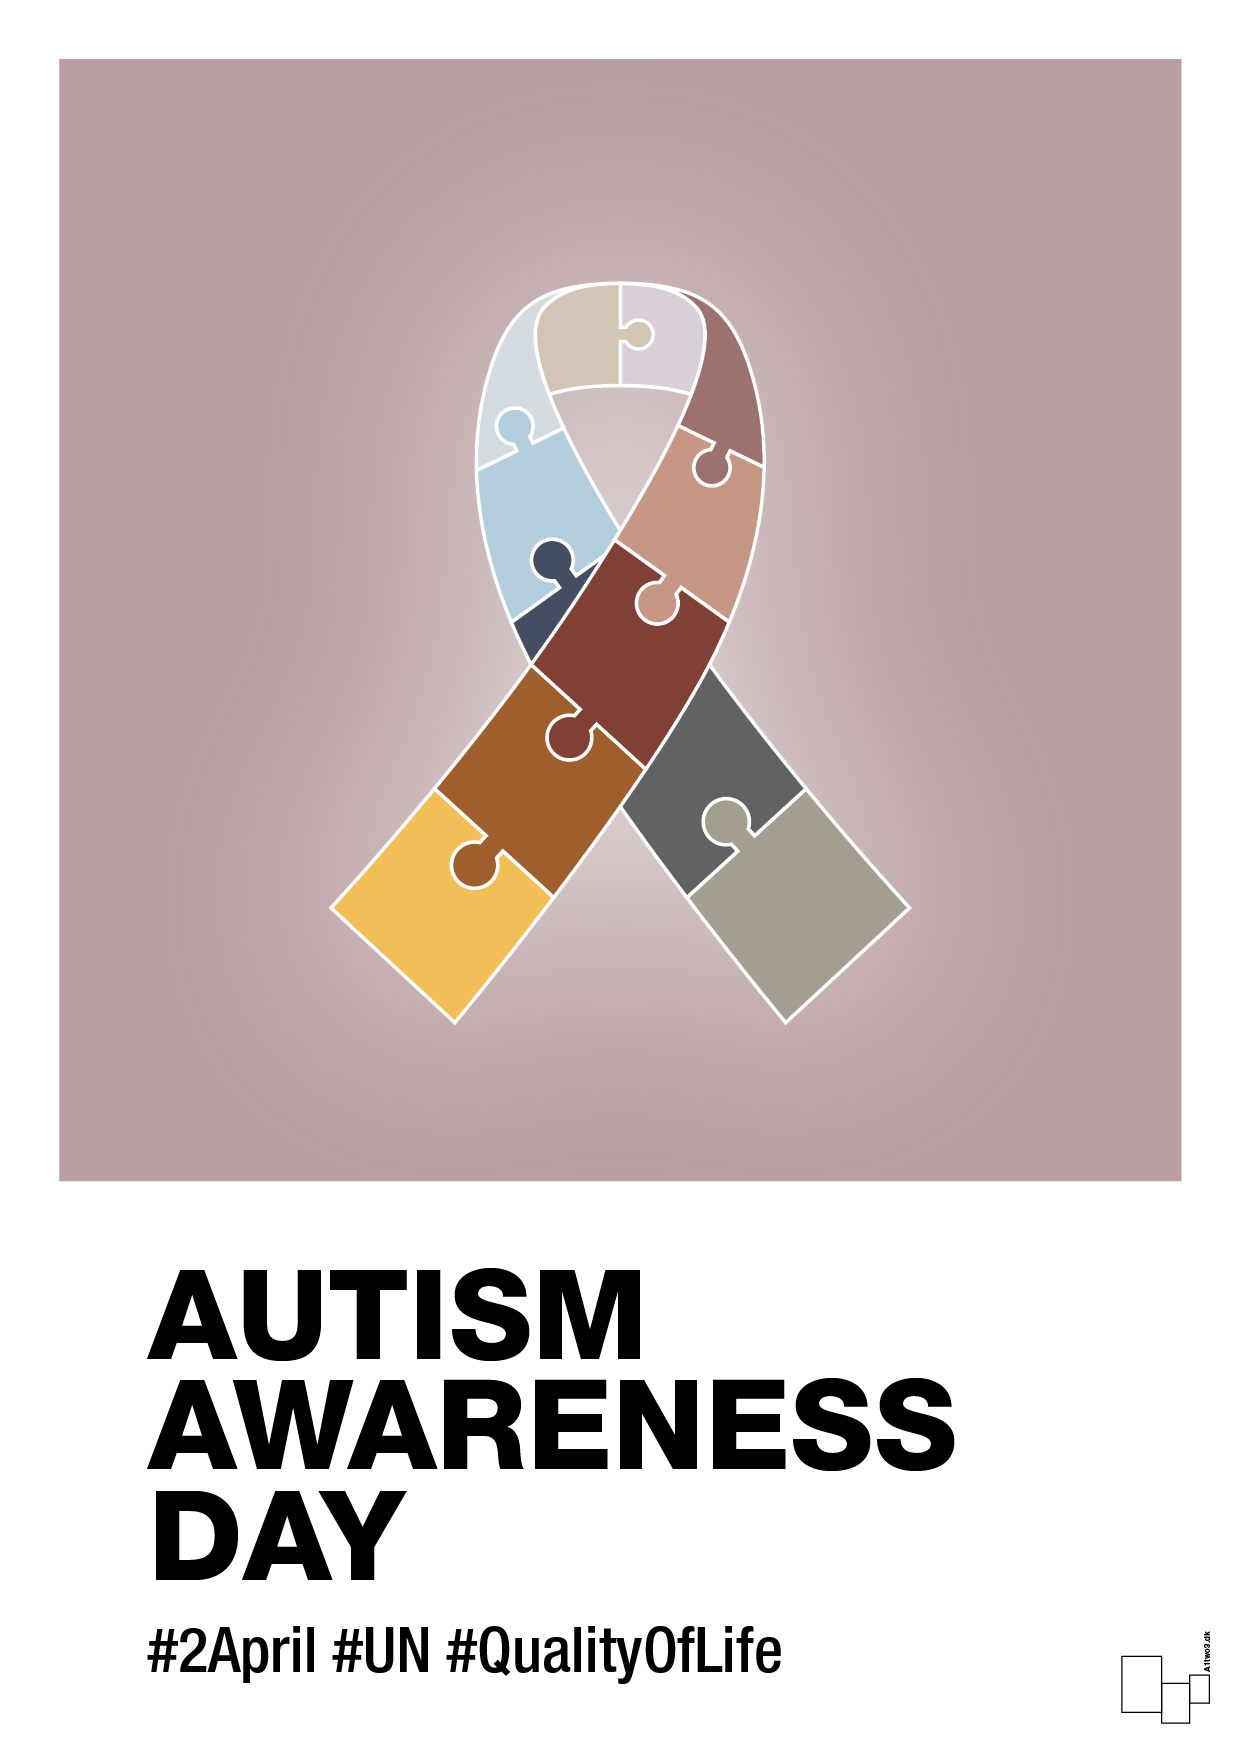 autism awareness day in fullcolor - Plakat med Samfund i Light Rose